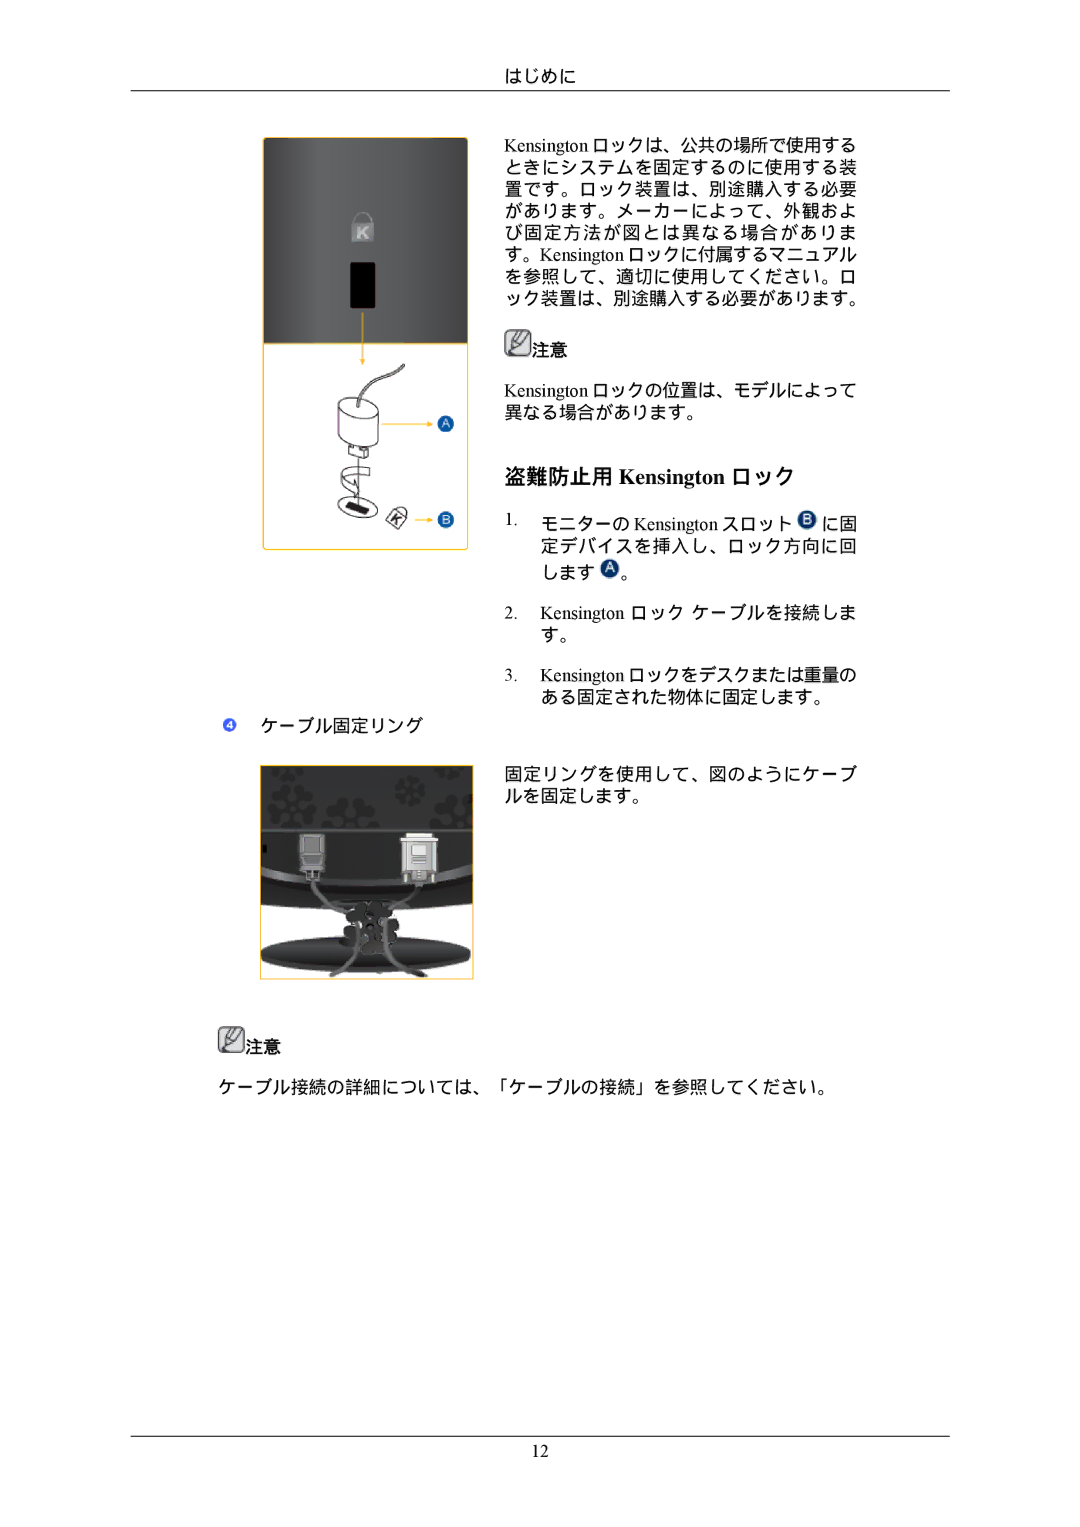 Samsung LS22CMEKFV/XJ, LS22CMFKFV/XJ manual 盗難防止用 Kensington ロック 